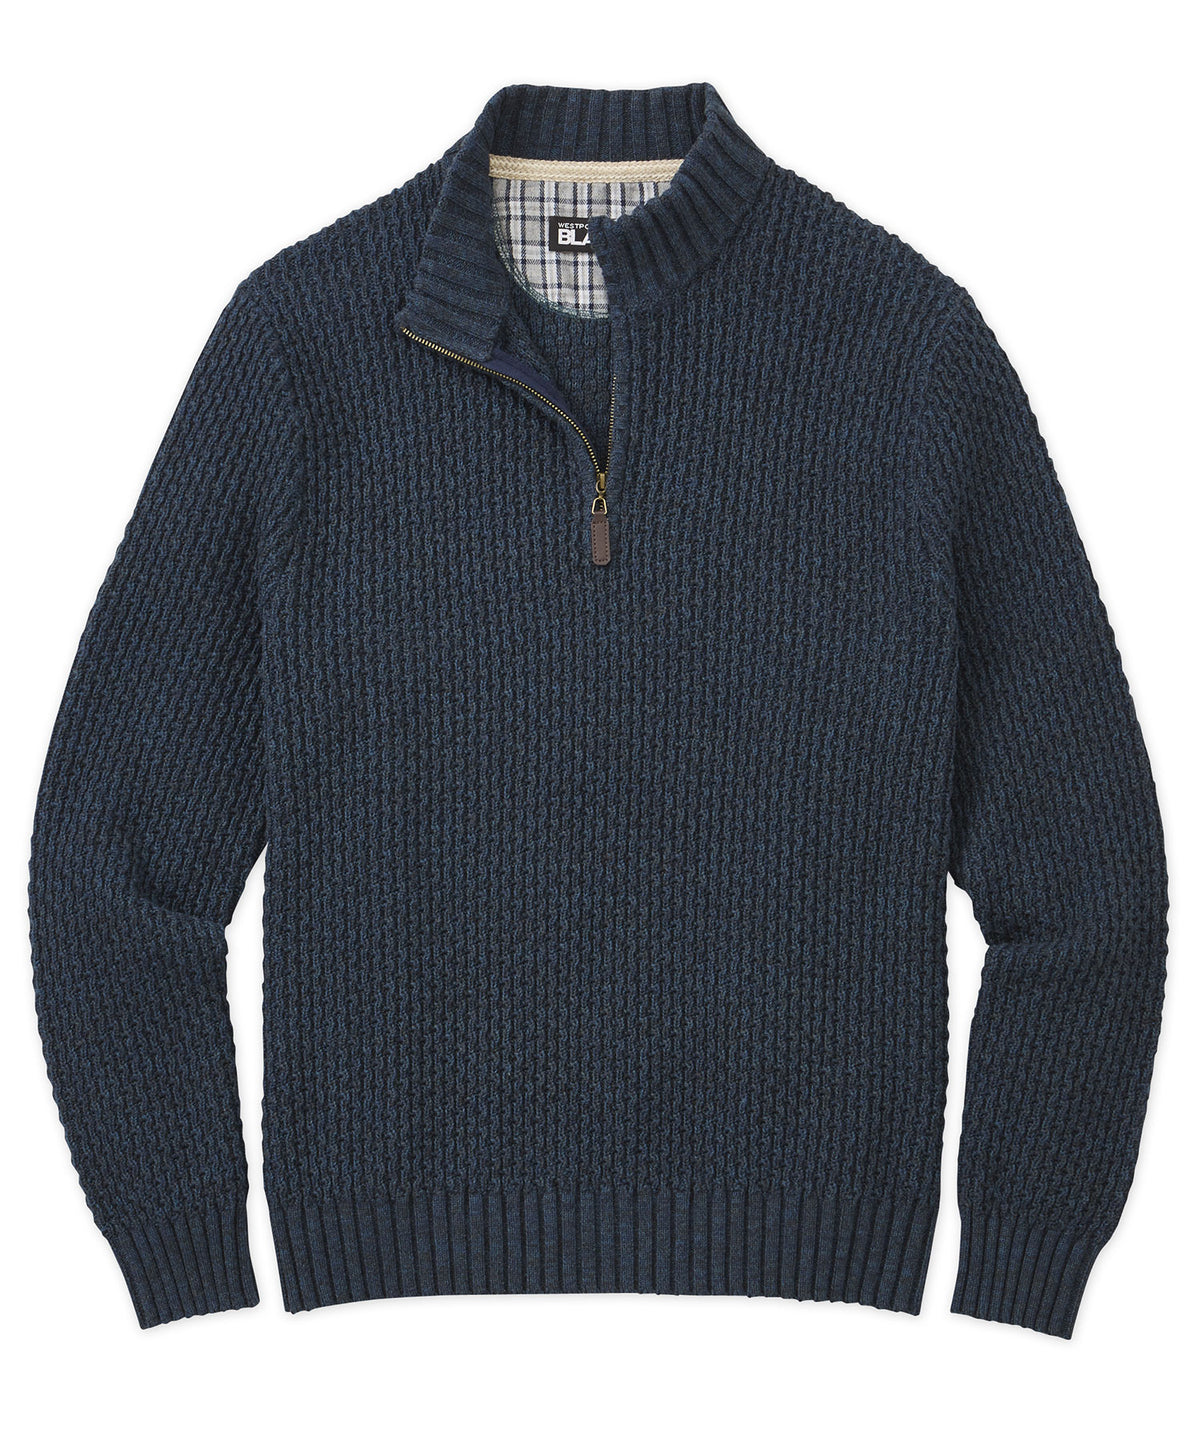 Westport Black Tri Color Quarter-Zip Sweater